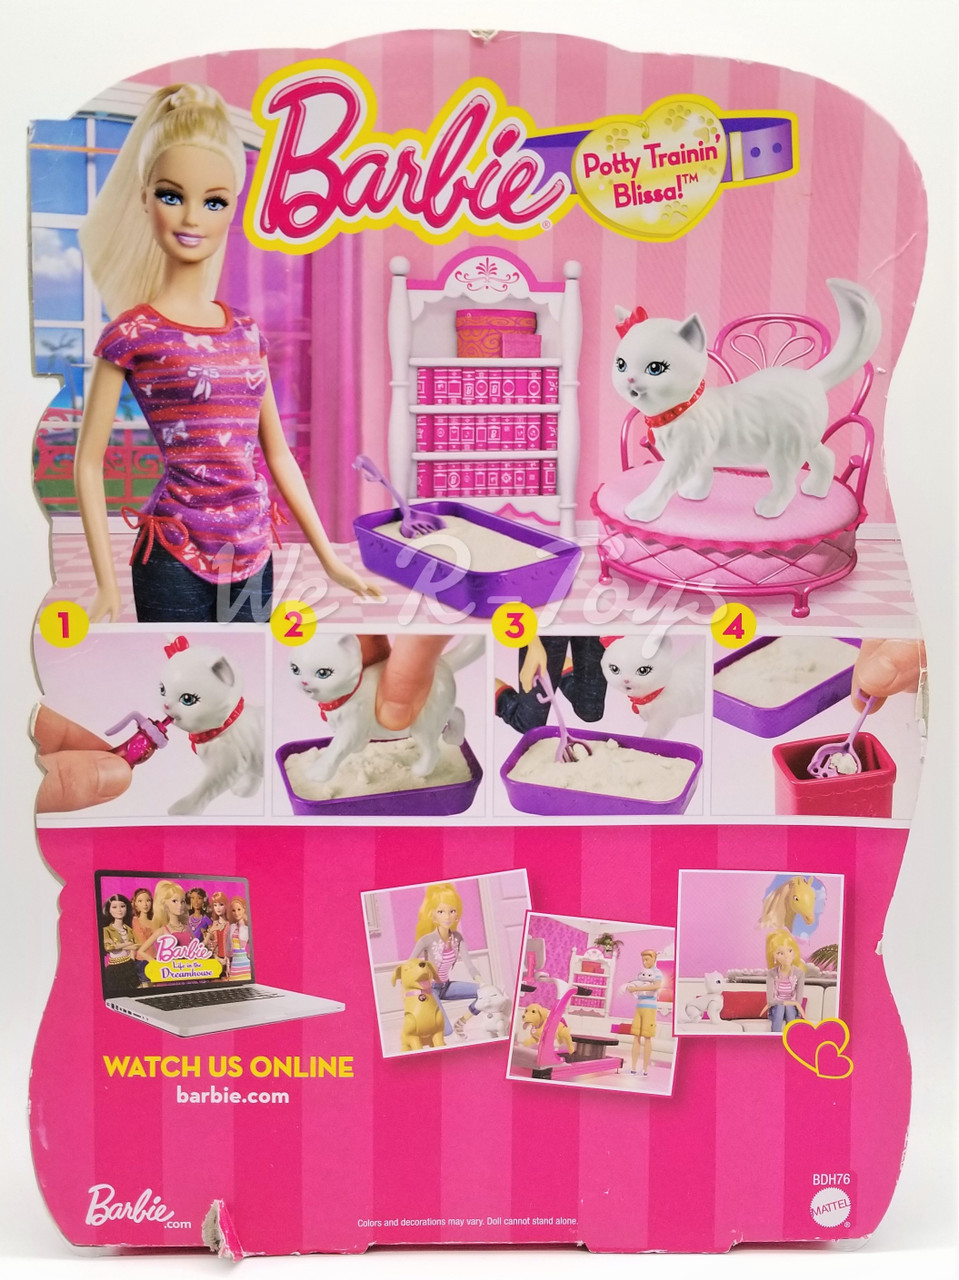 char cline add barbie games potty race photo